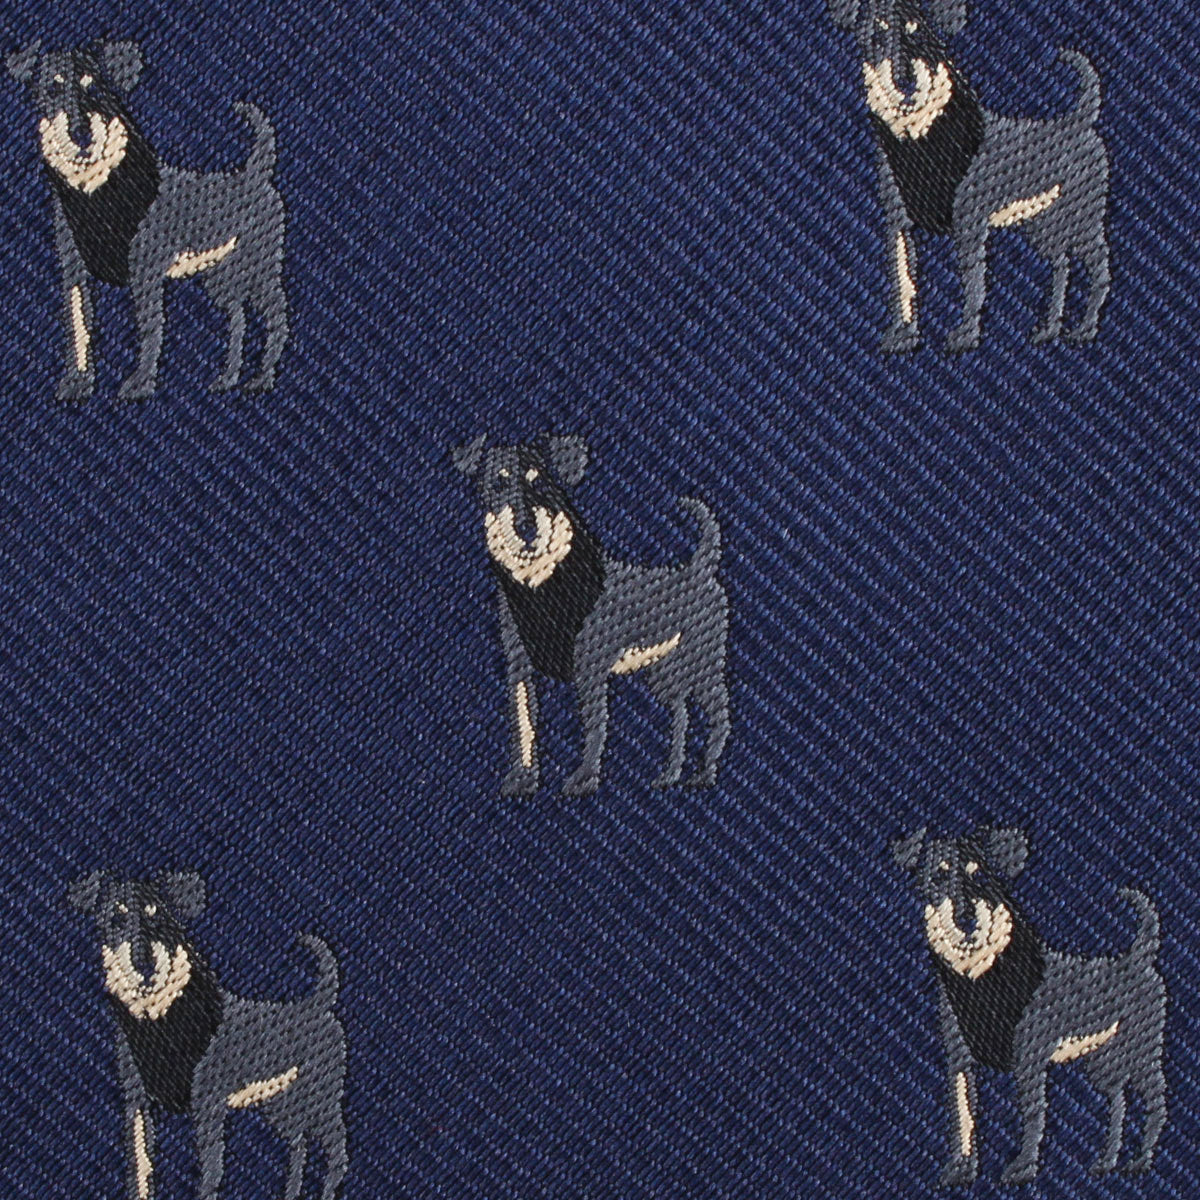 Rottweiler Dog Fabric Pocket Square